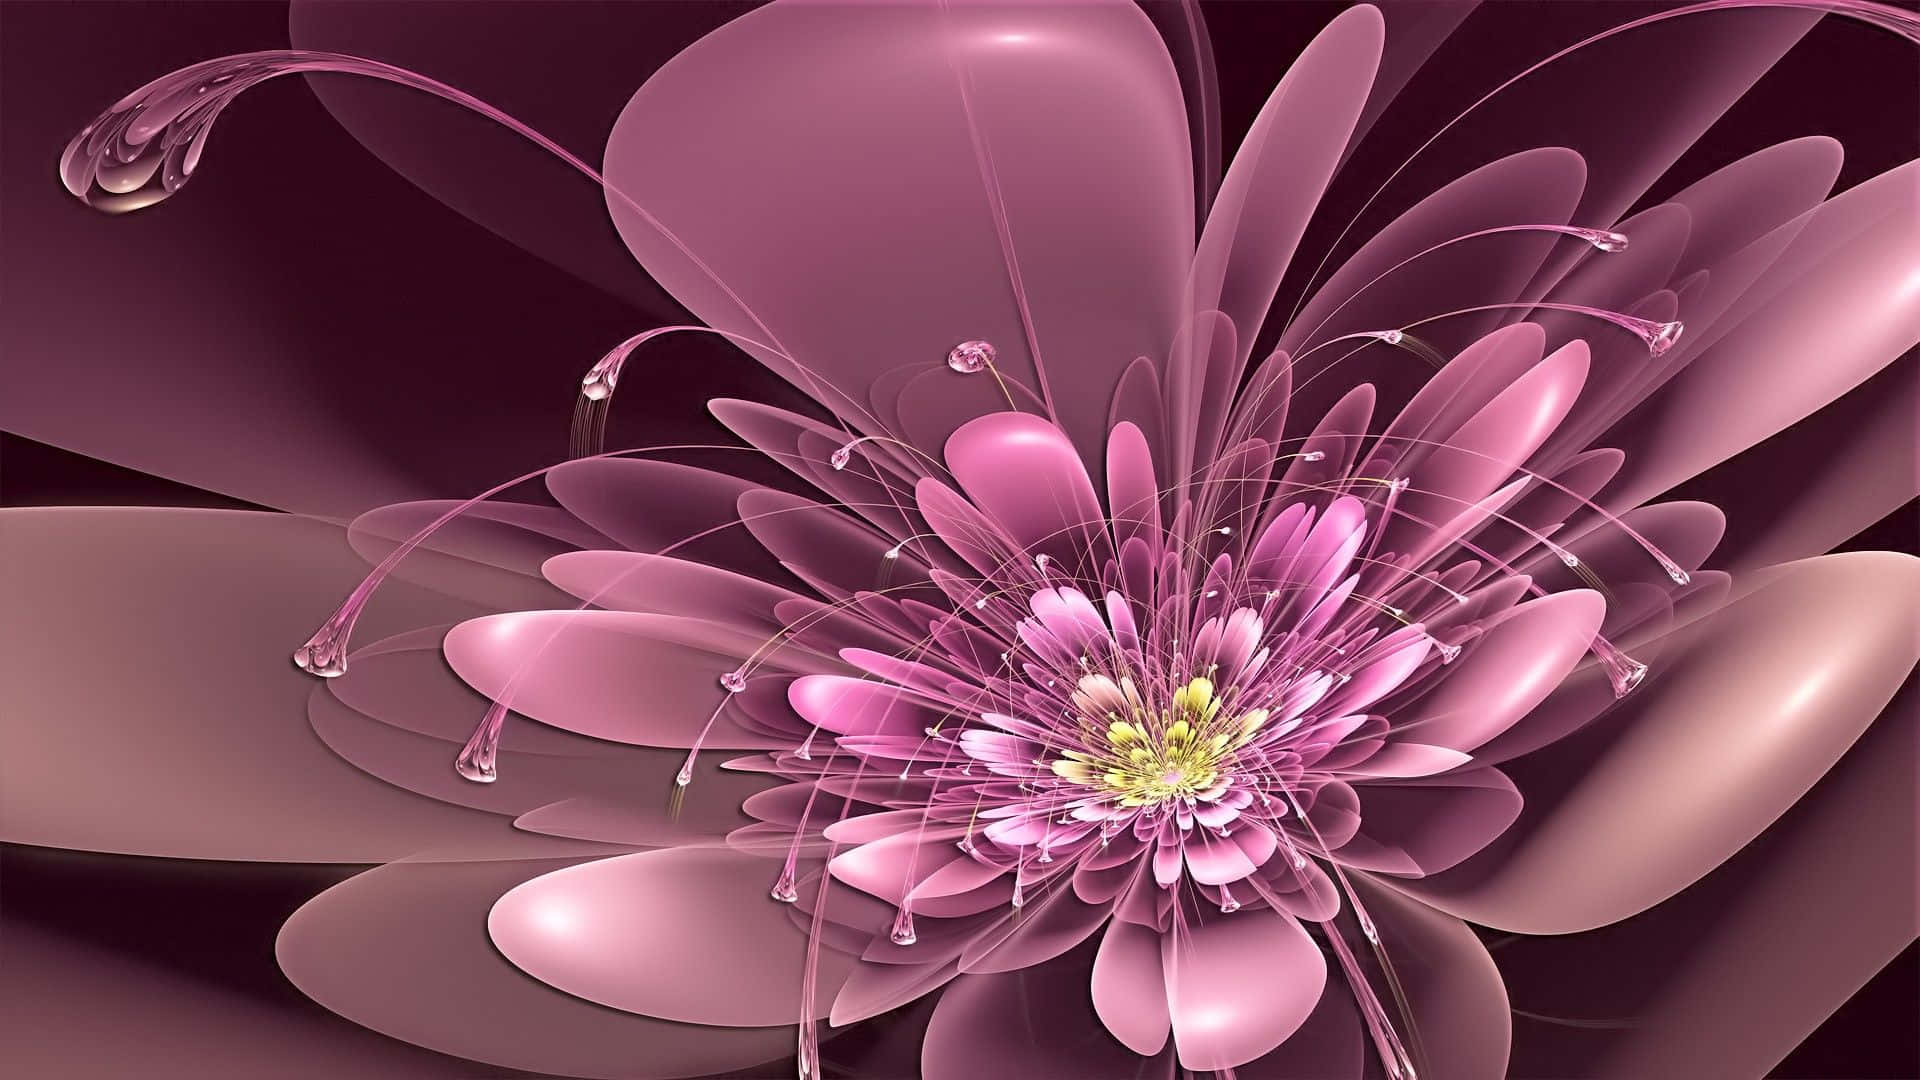 Enchanting 3D Flower Blooming on a Dark Background Wallpaper